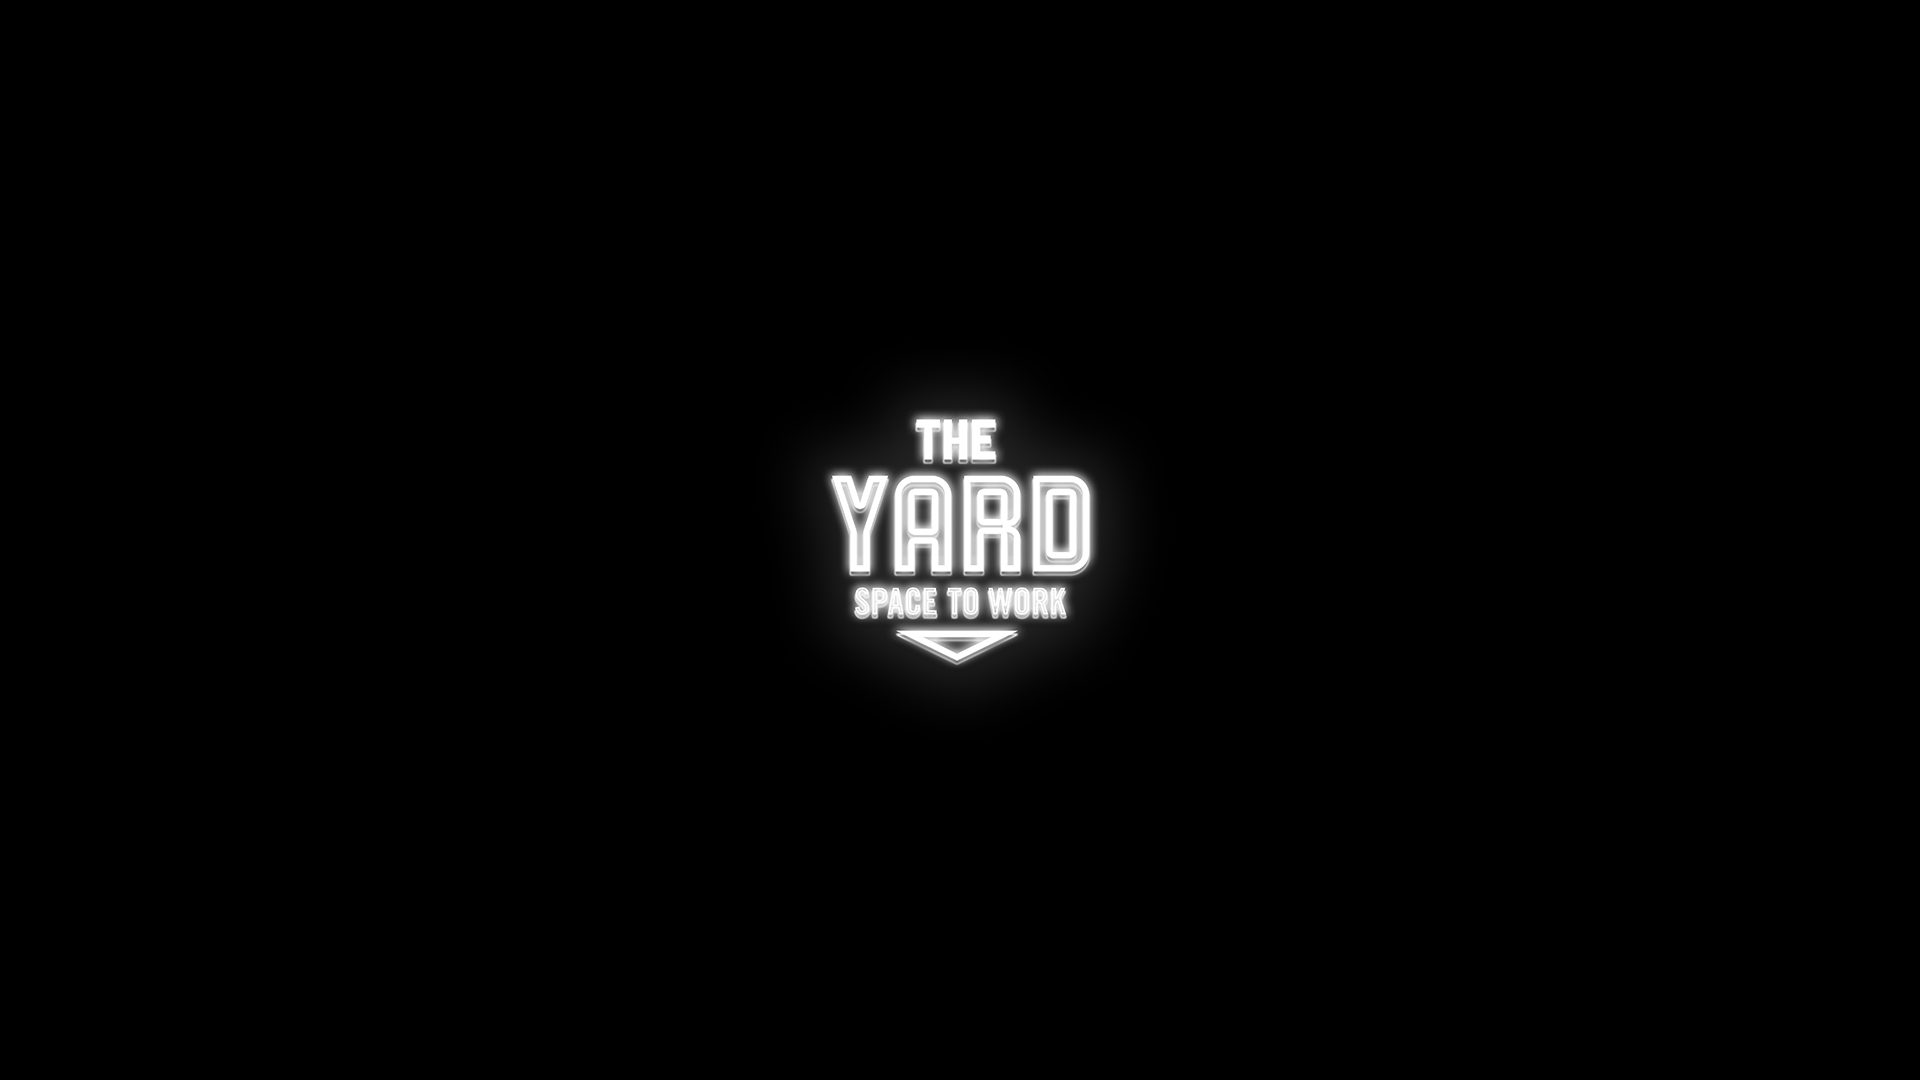 The Yard Website Design and Development